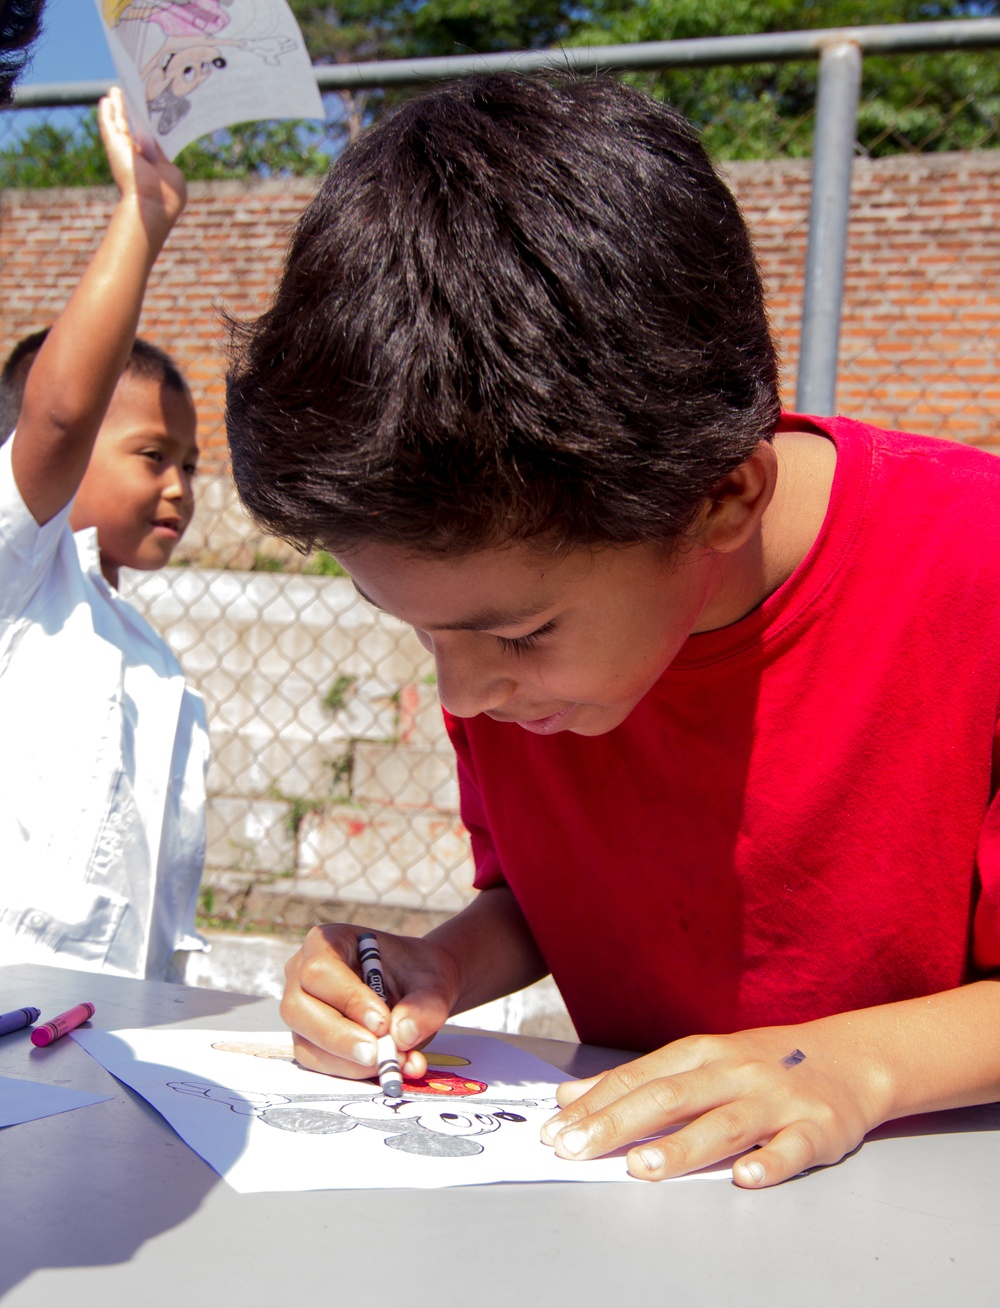 Community relations in Ciudad Arce